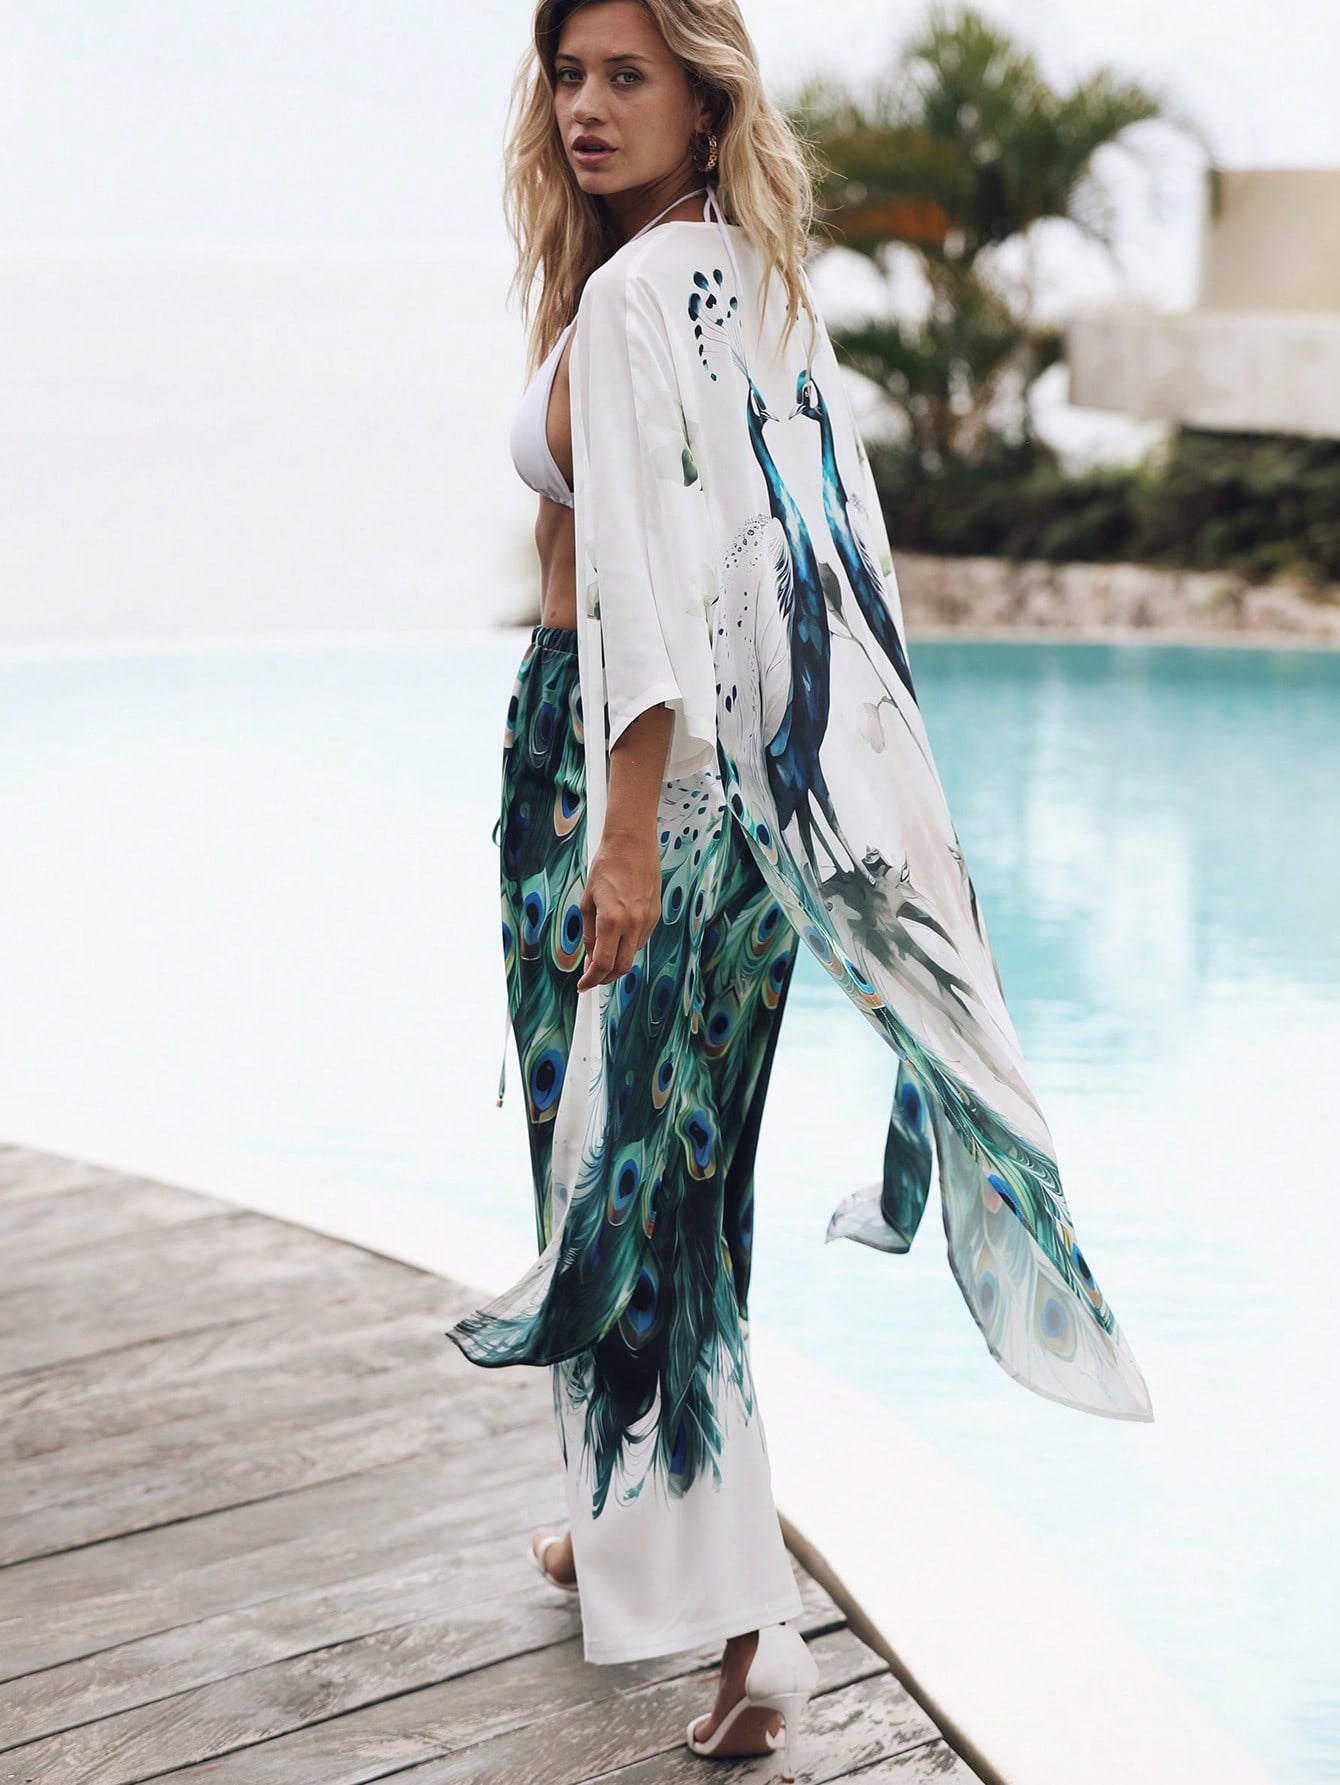 Bohemian Dreams: Exquisite Peacock Print Kimono Pants for Effortless Elegance